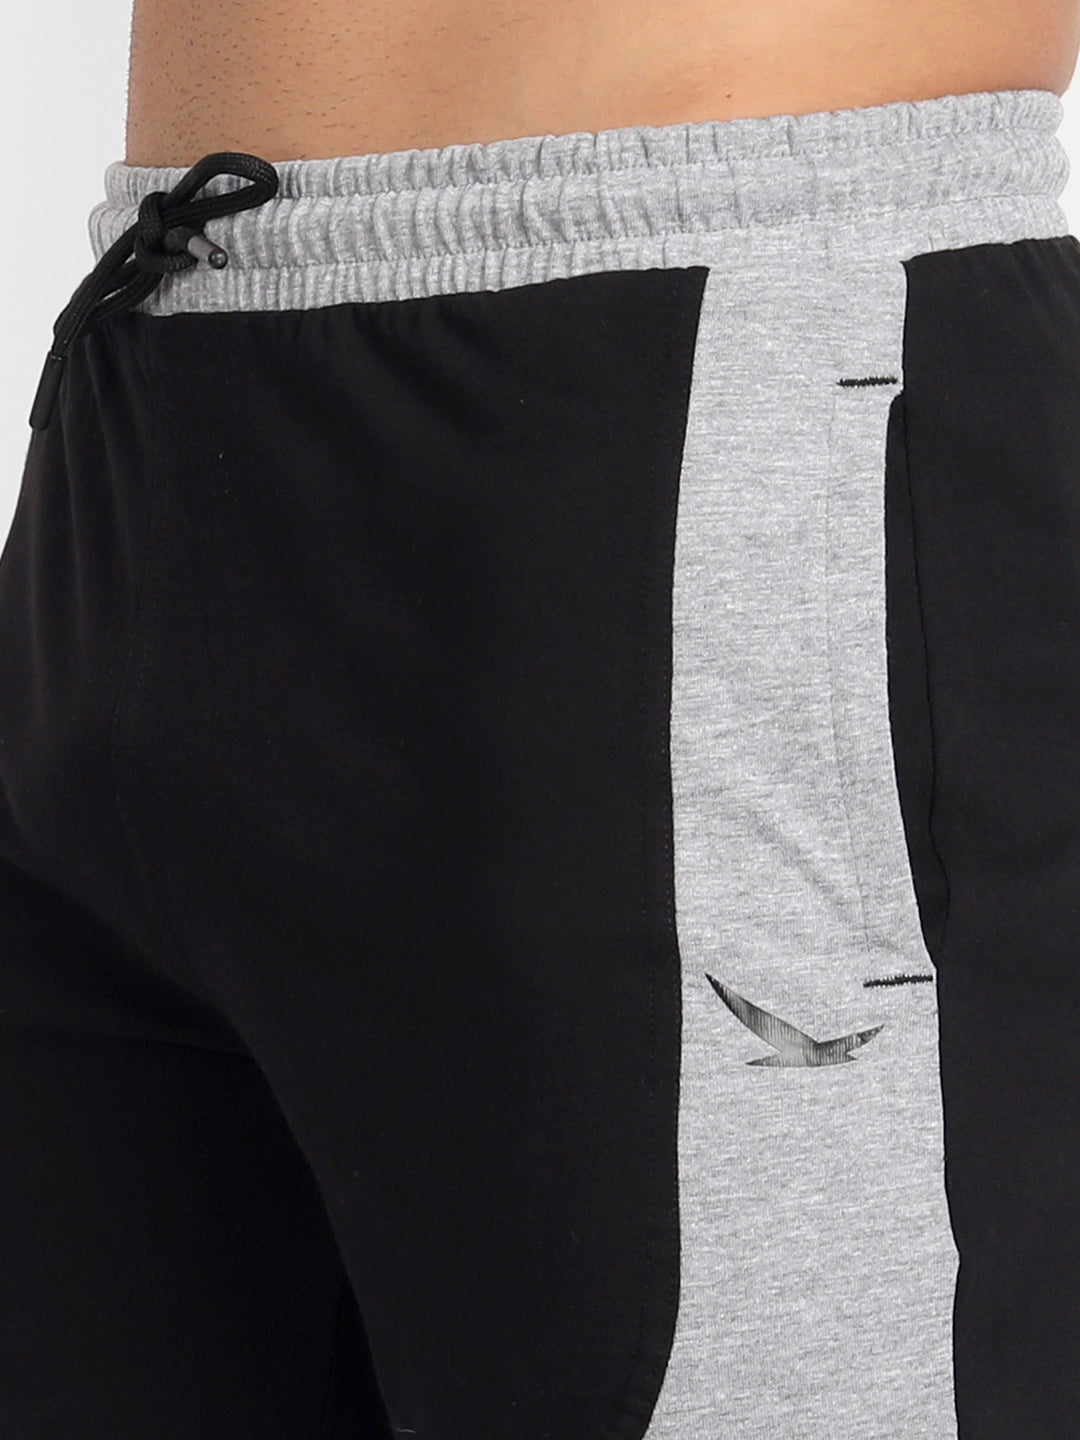 HiFlyers Men Black-Grey Knitted Sports Shorts